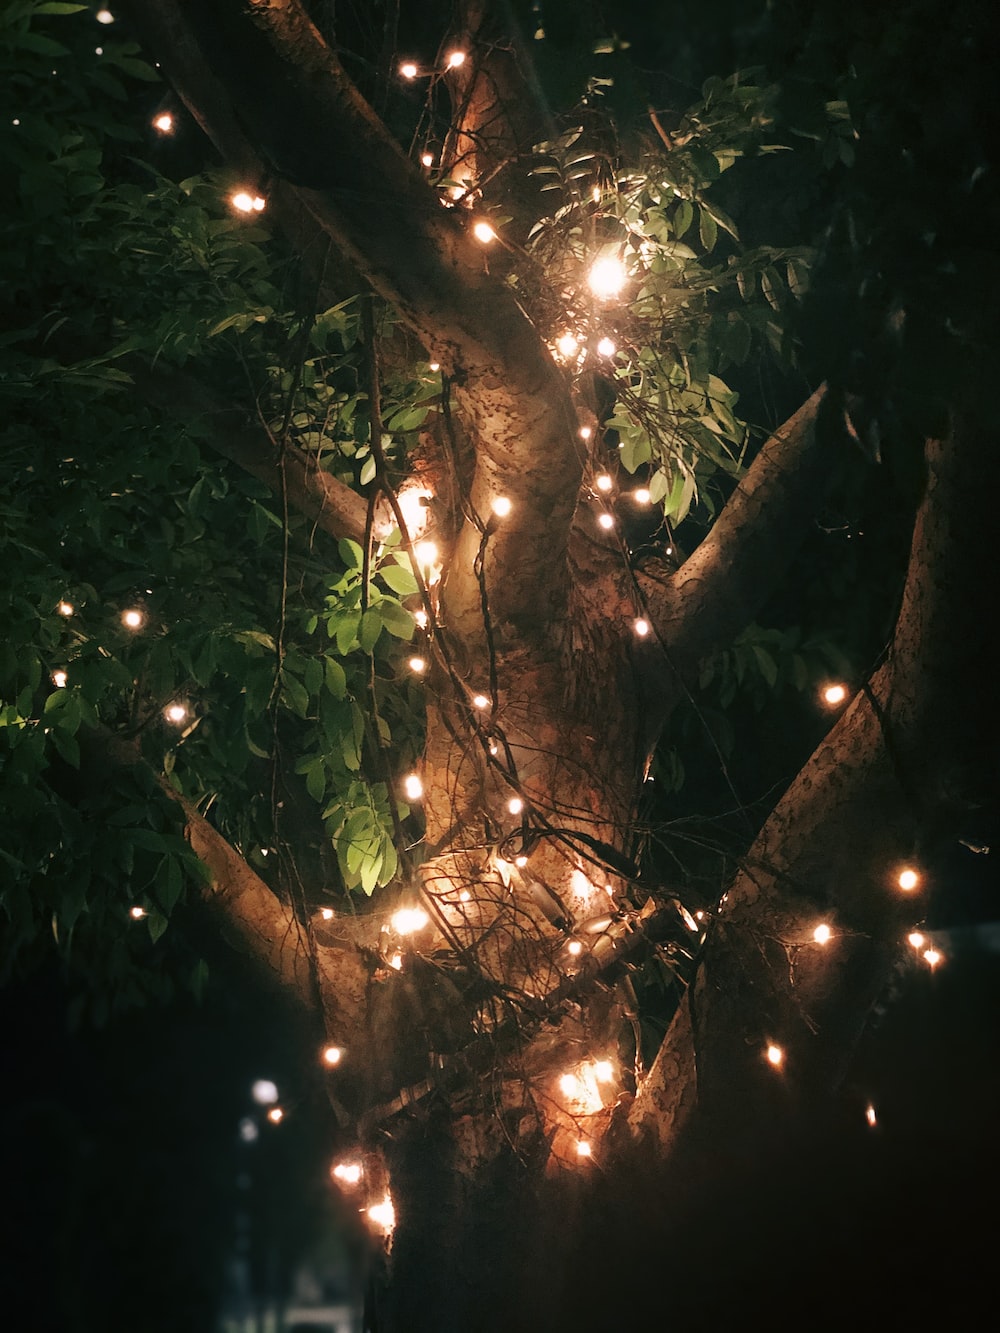 Outdoor lighting on a tree